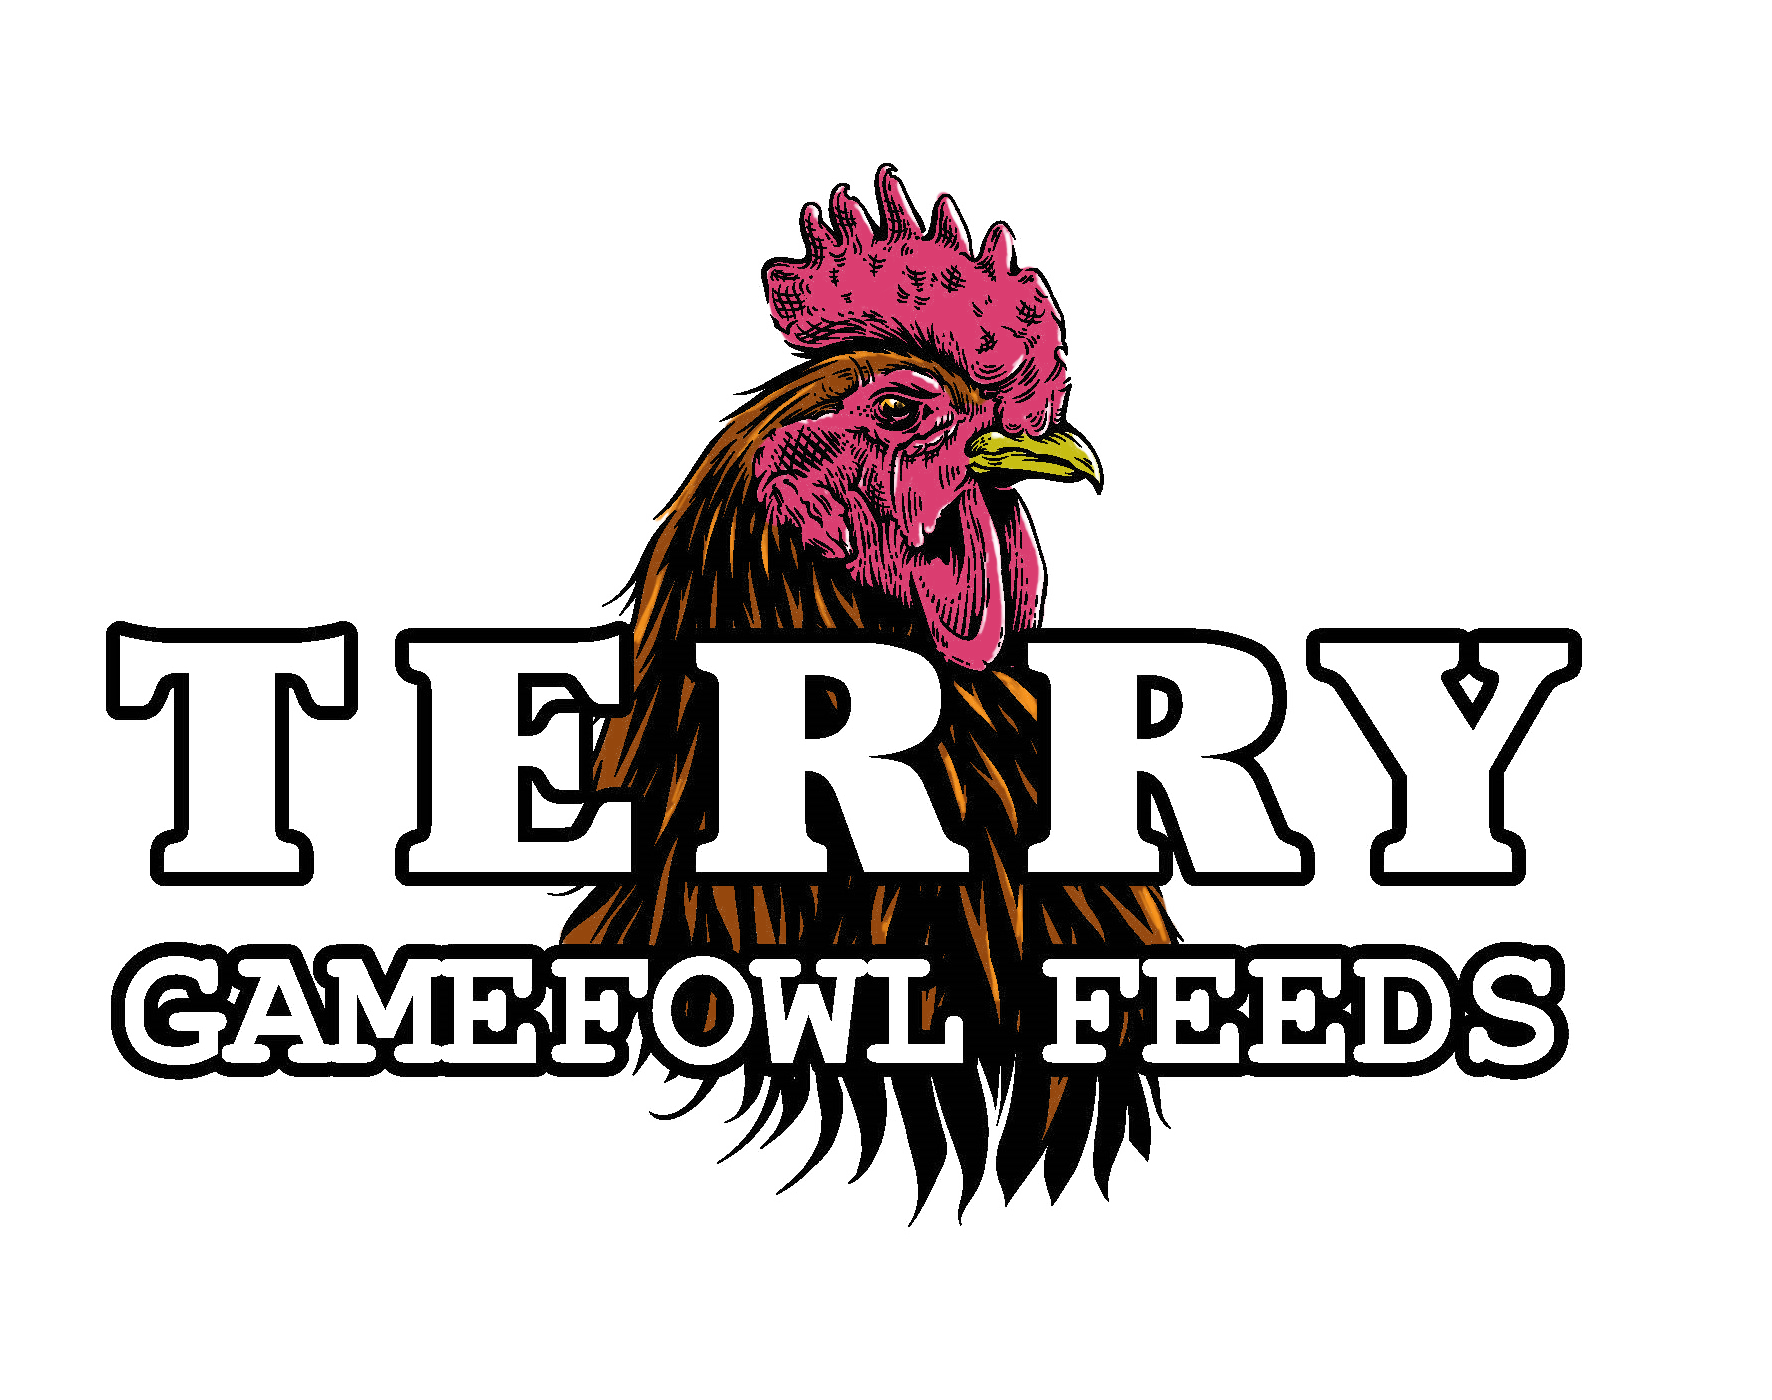 Terry Gemefowl Feeds logo
